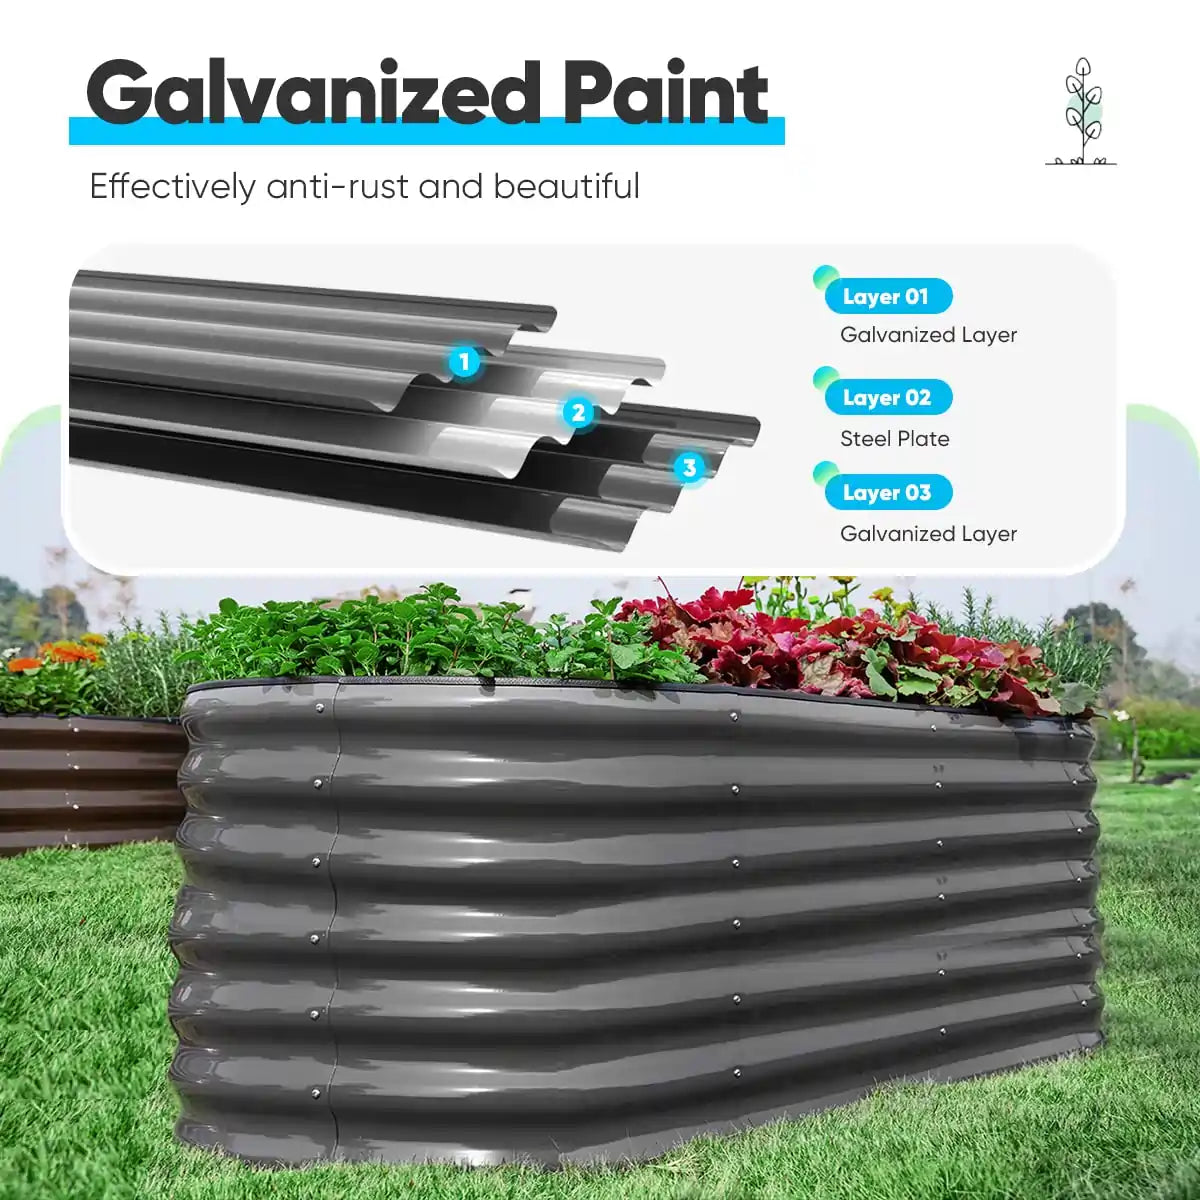 6' x 3' x 2'  garden bed galvanized paint#color_dark grey